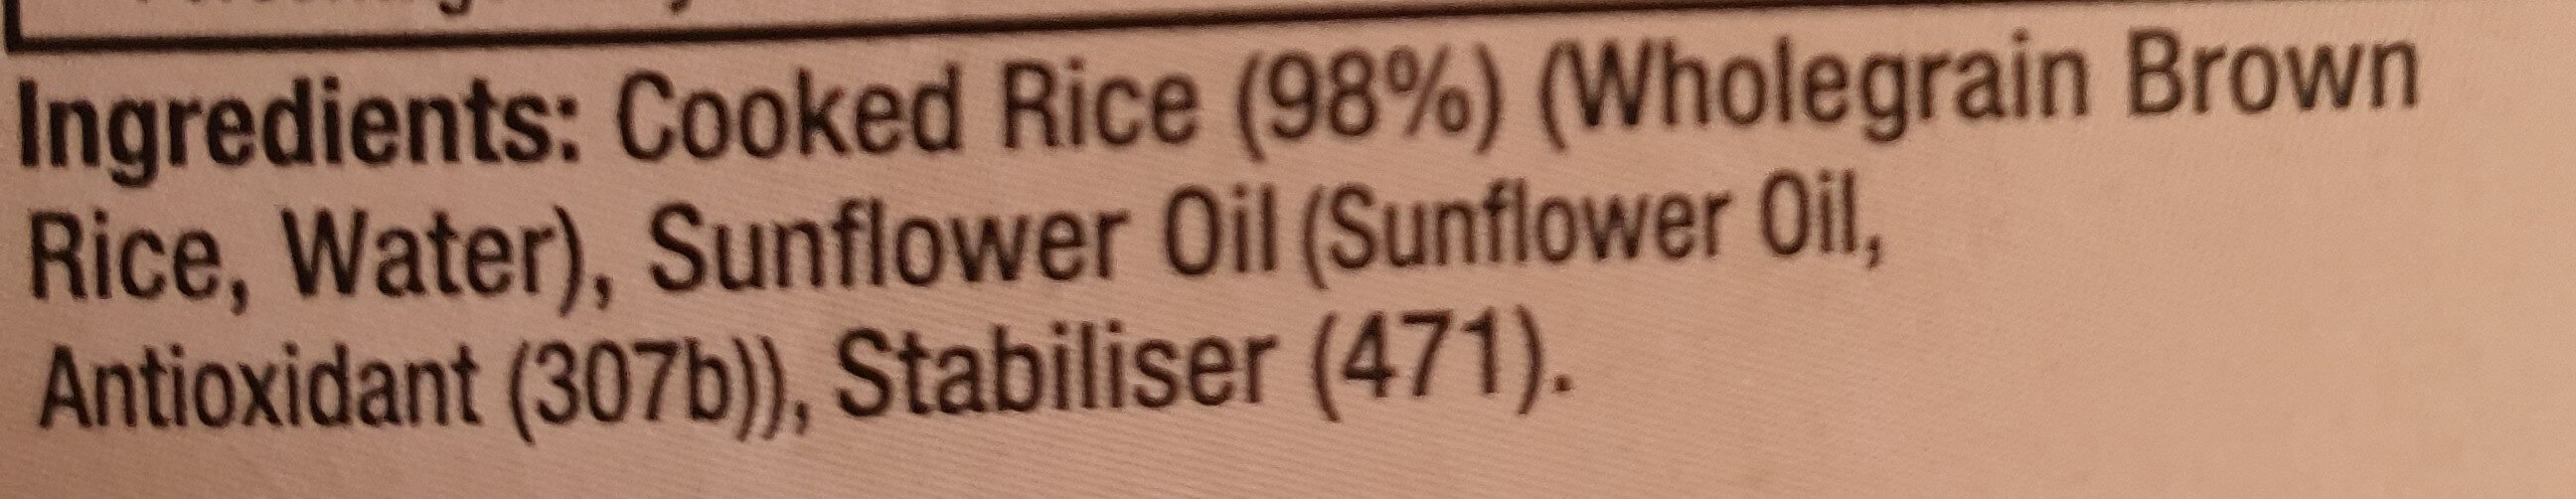 Brown Whole Gain Rice - Ingredients